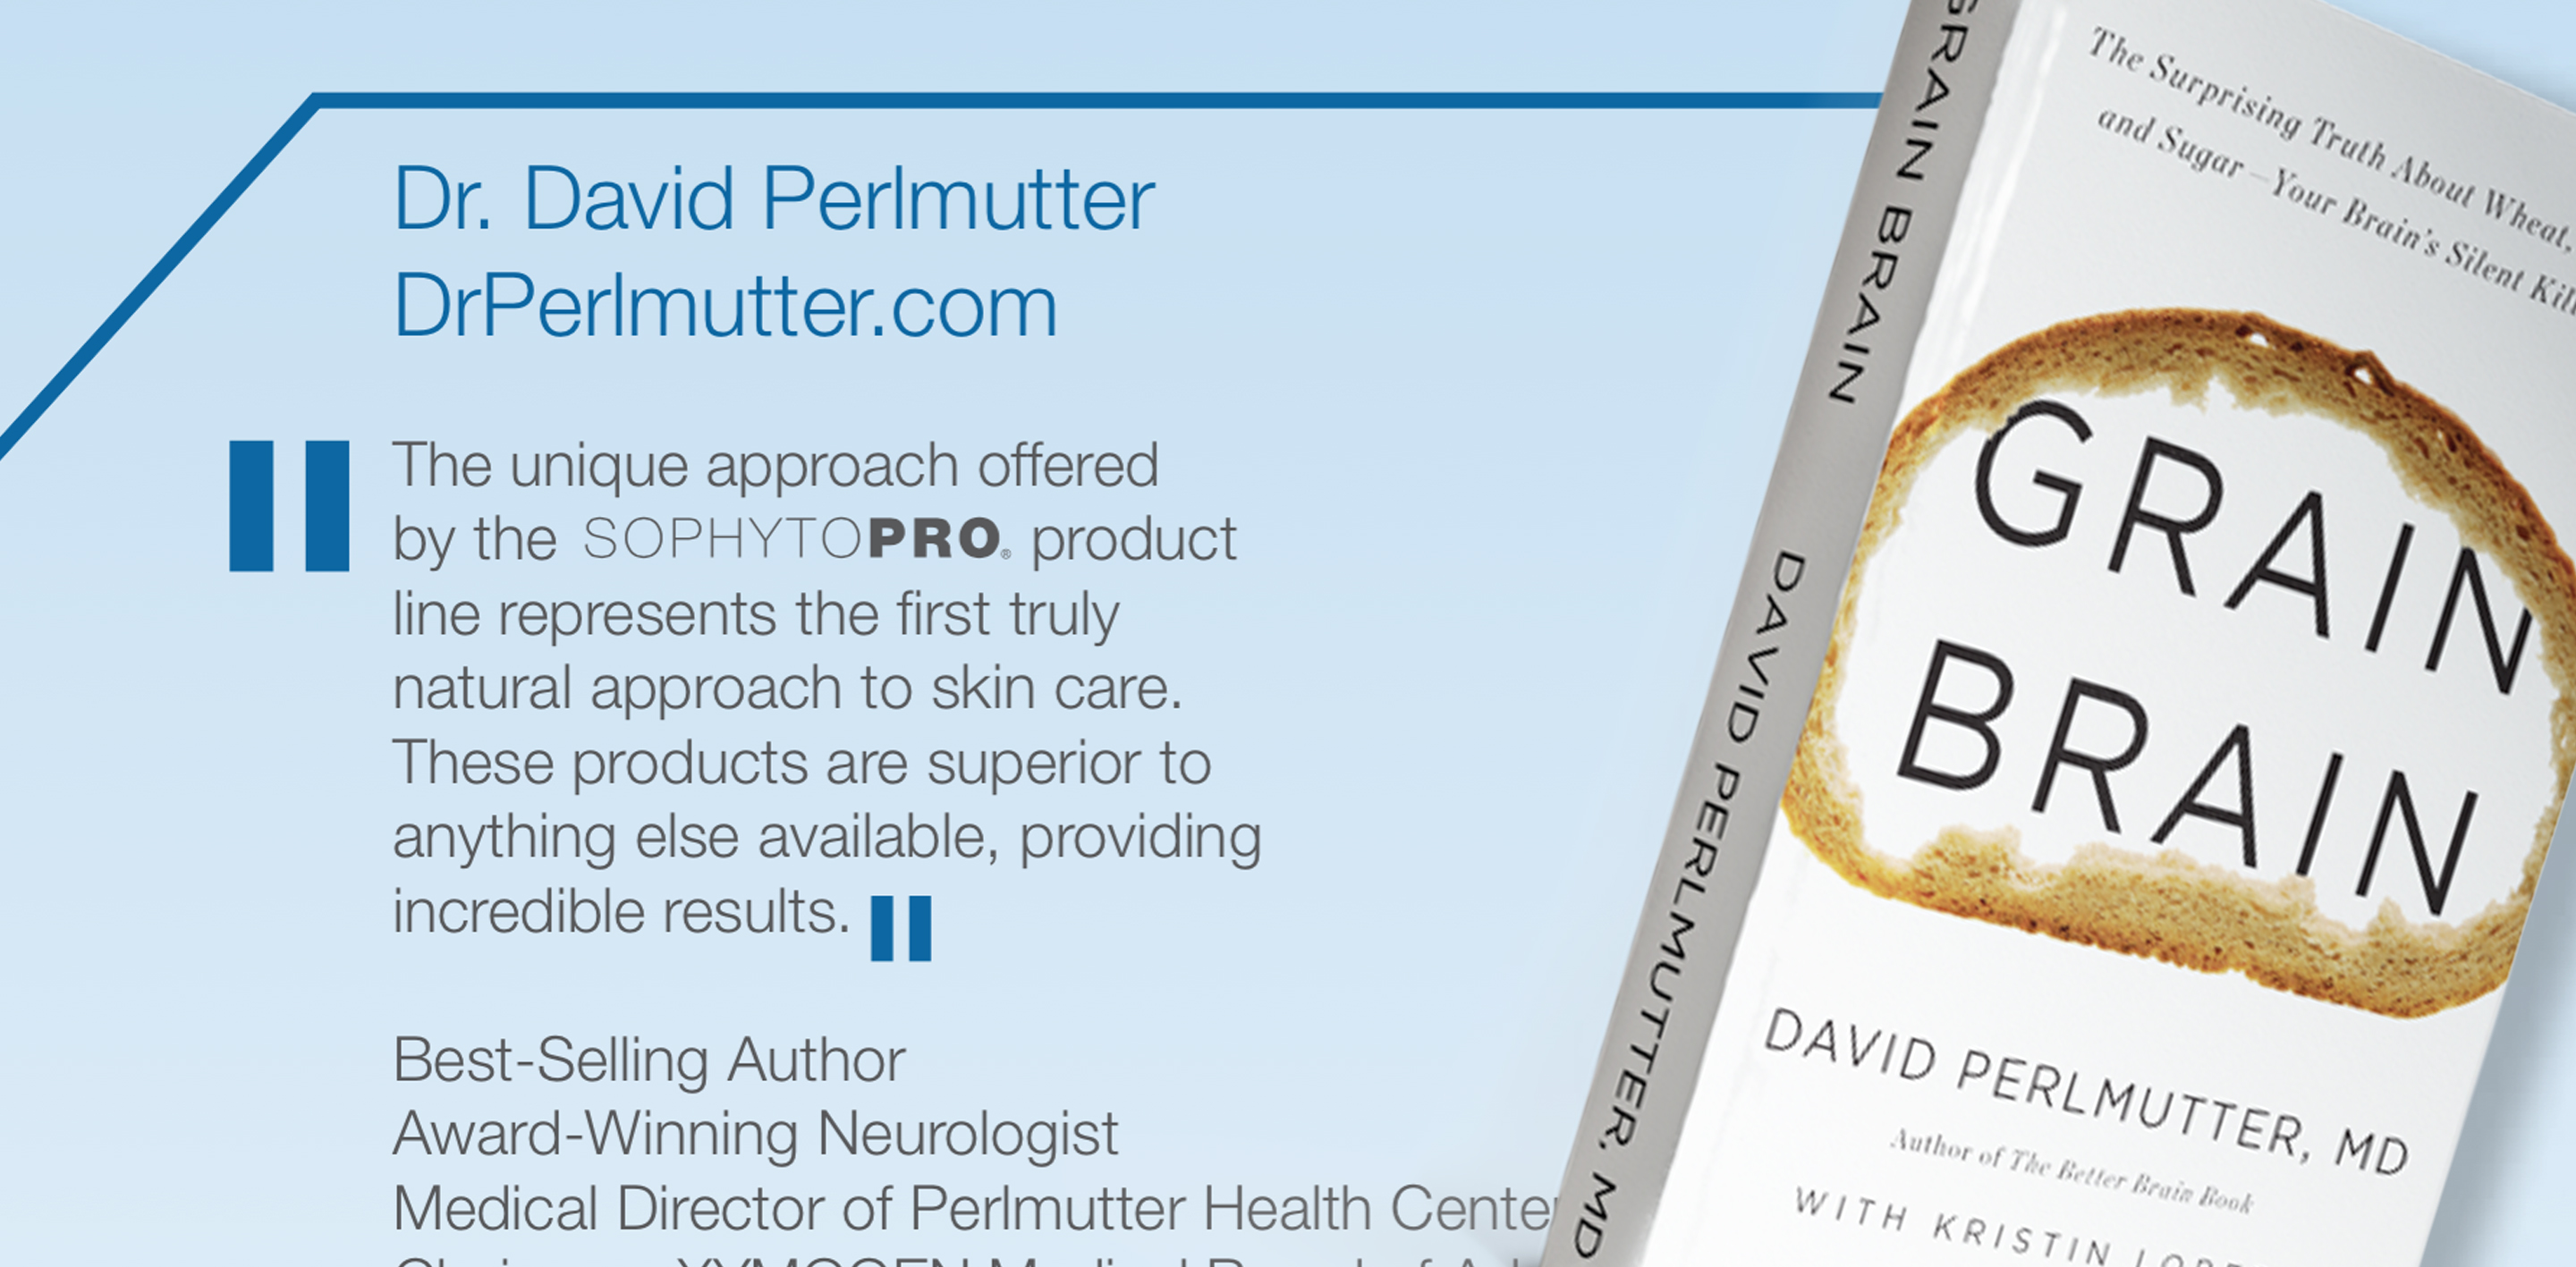 Grain Brain author David Perlmutter endorses sophytopro skincare products 